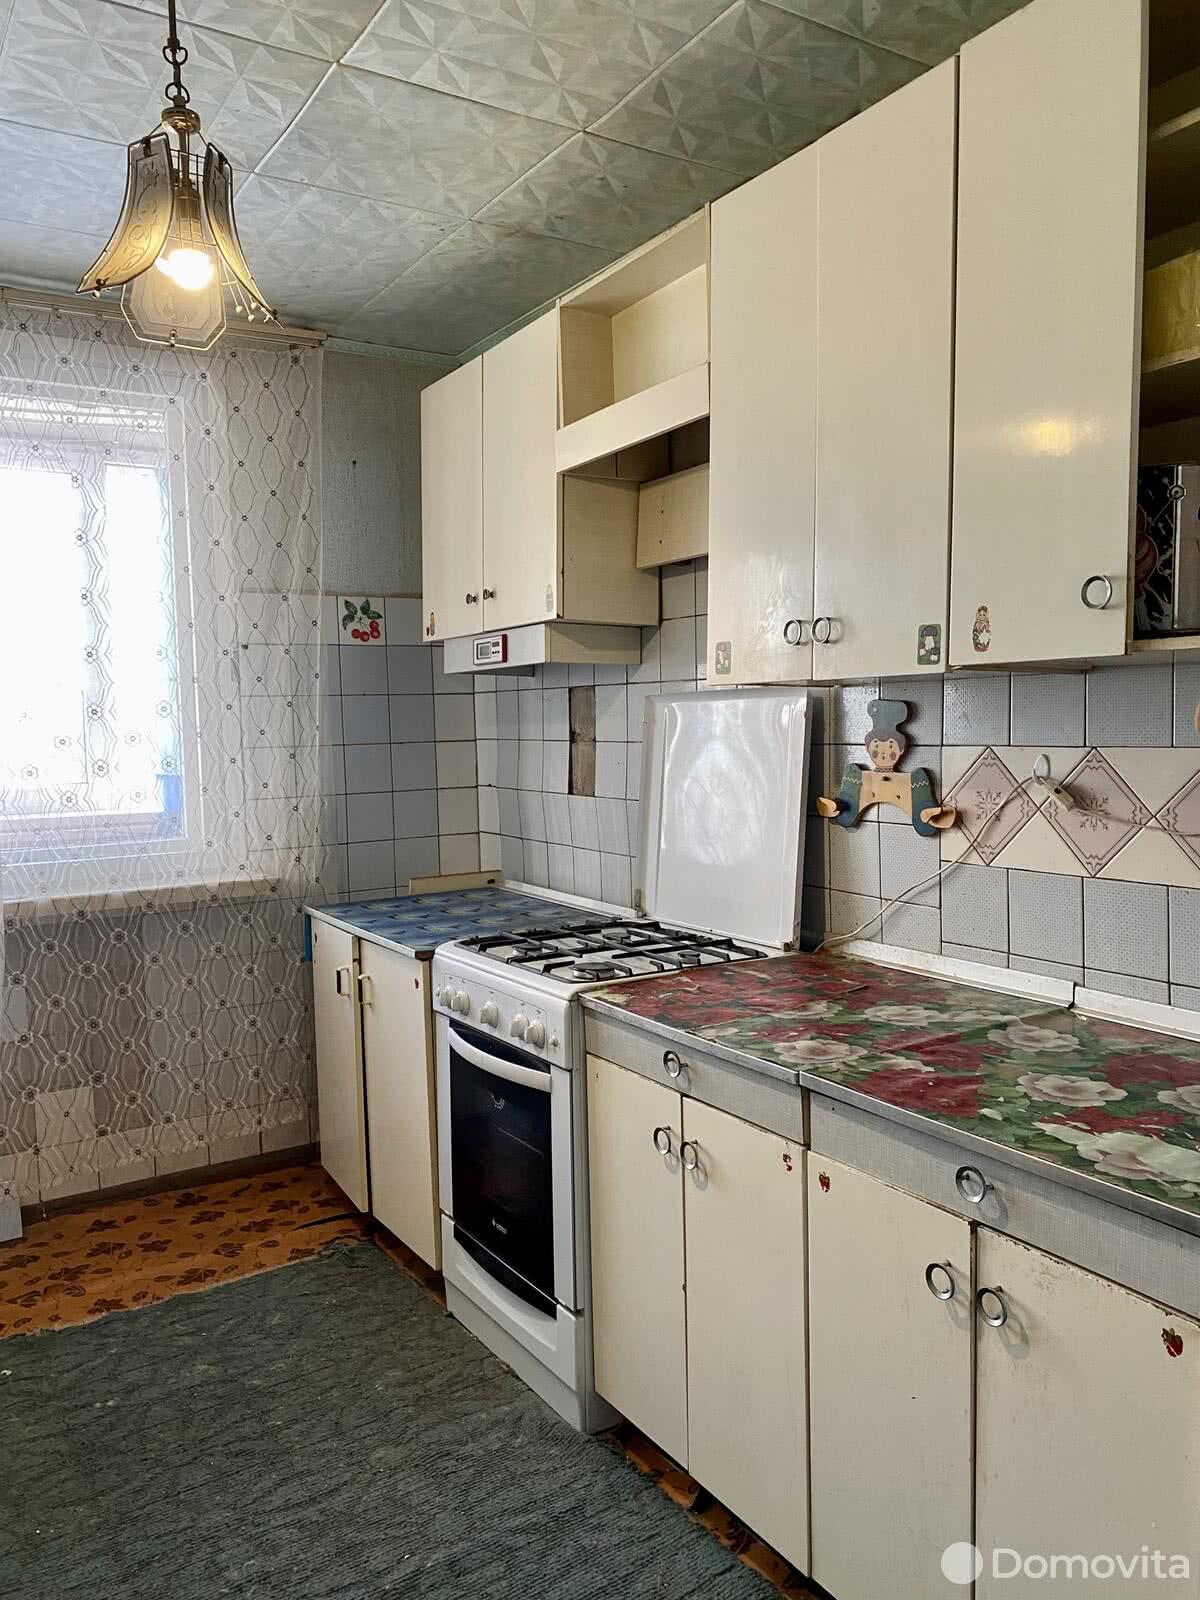 Цена продажи квартиры, Могилев, ул. Ямницкая, д. 89